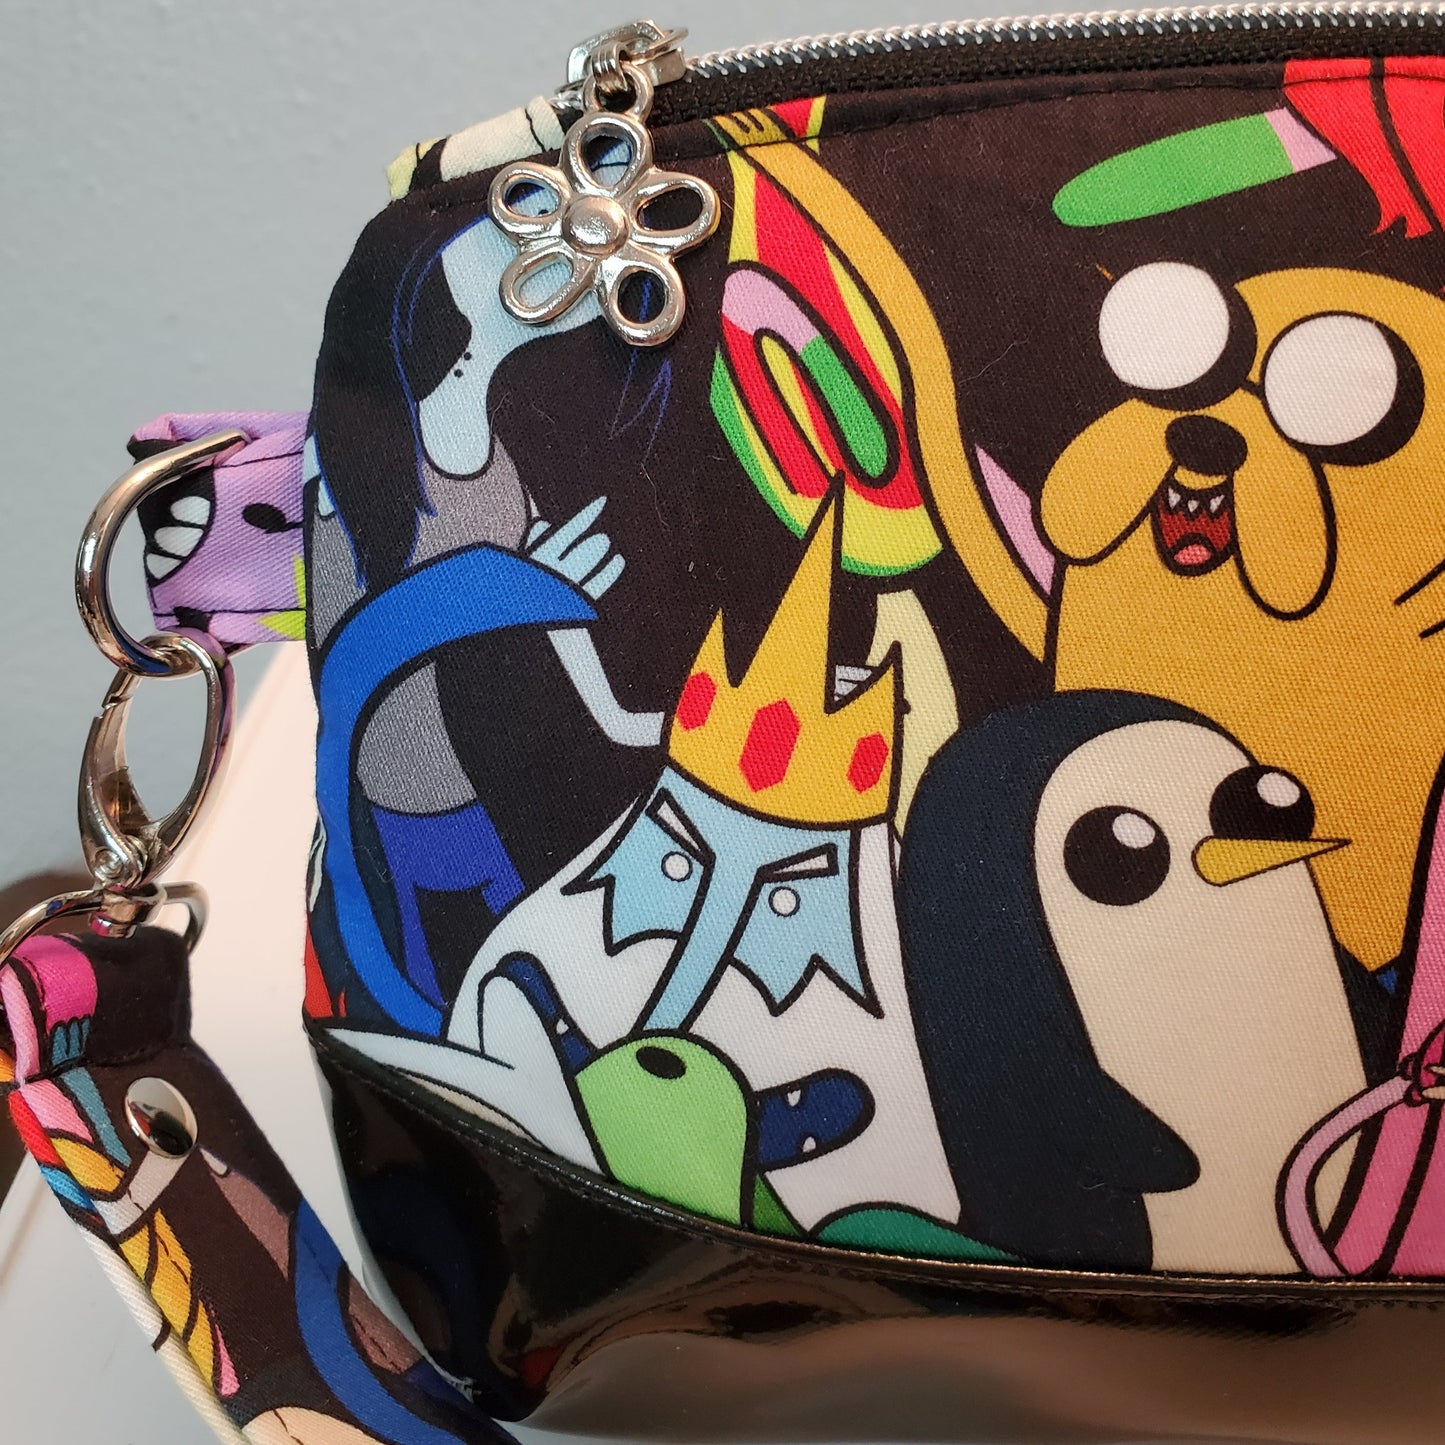 Adventure Time Wristlet Clutch Bag